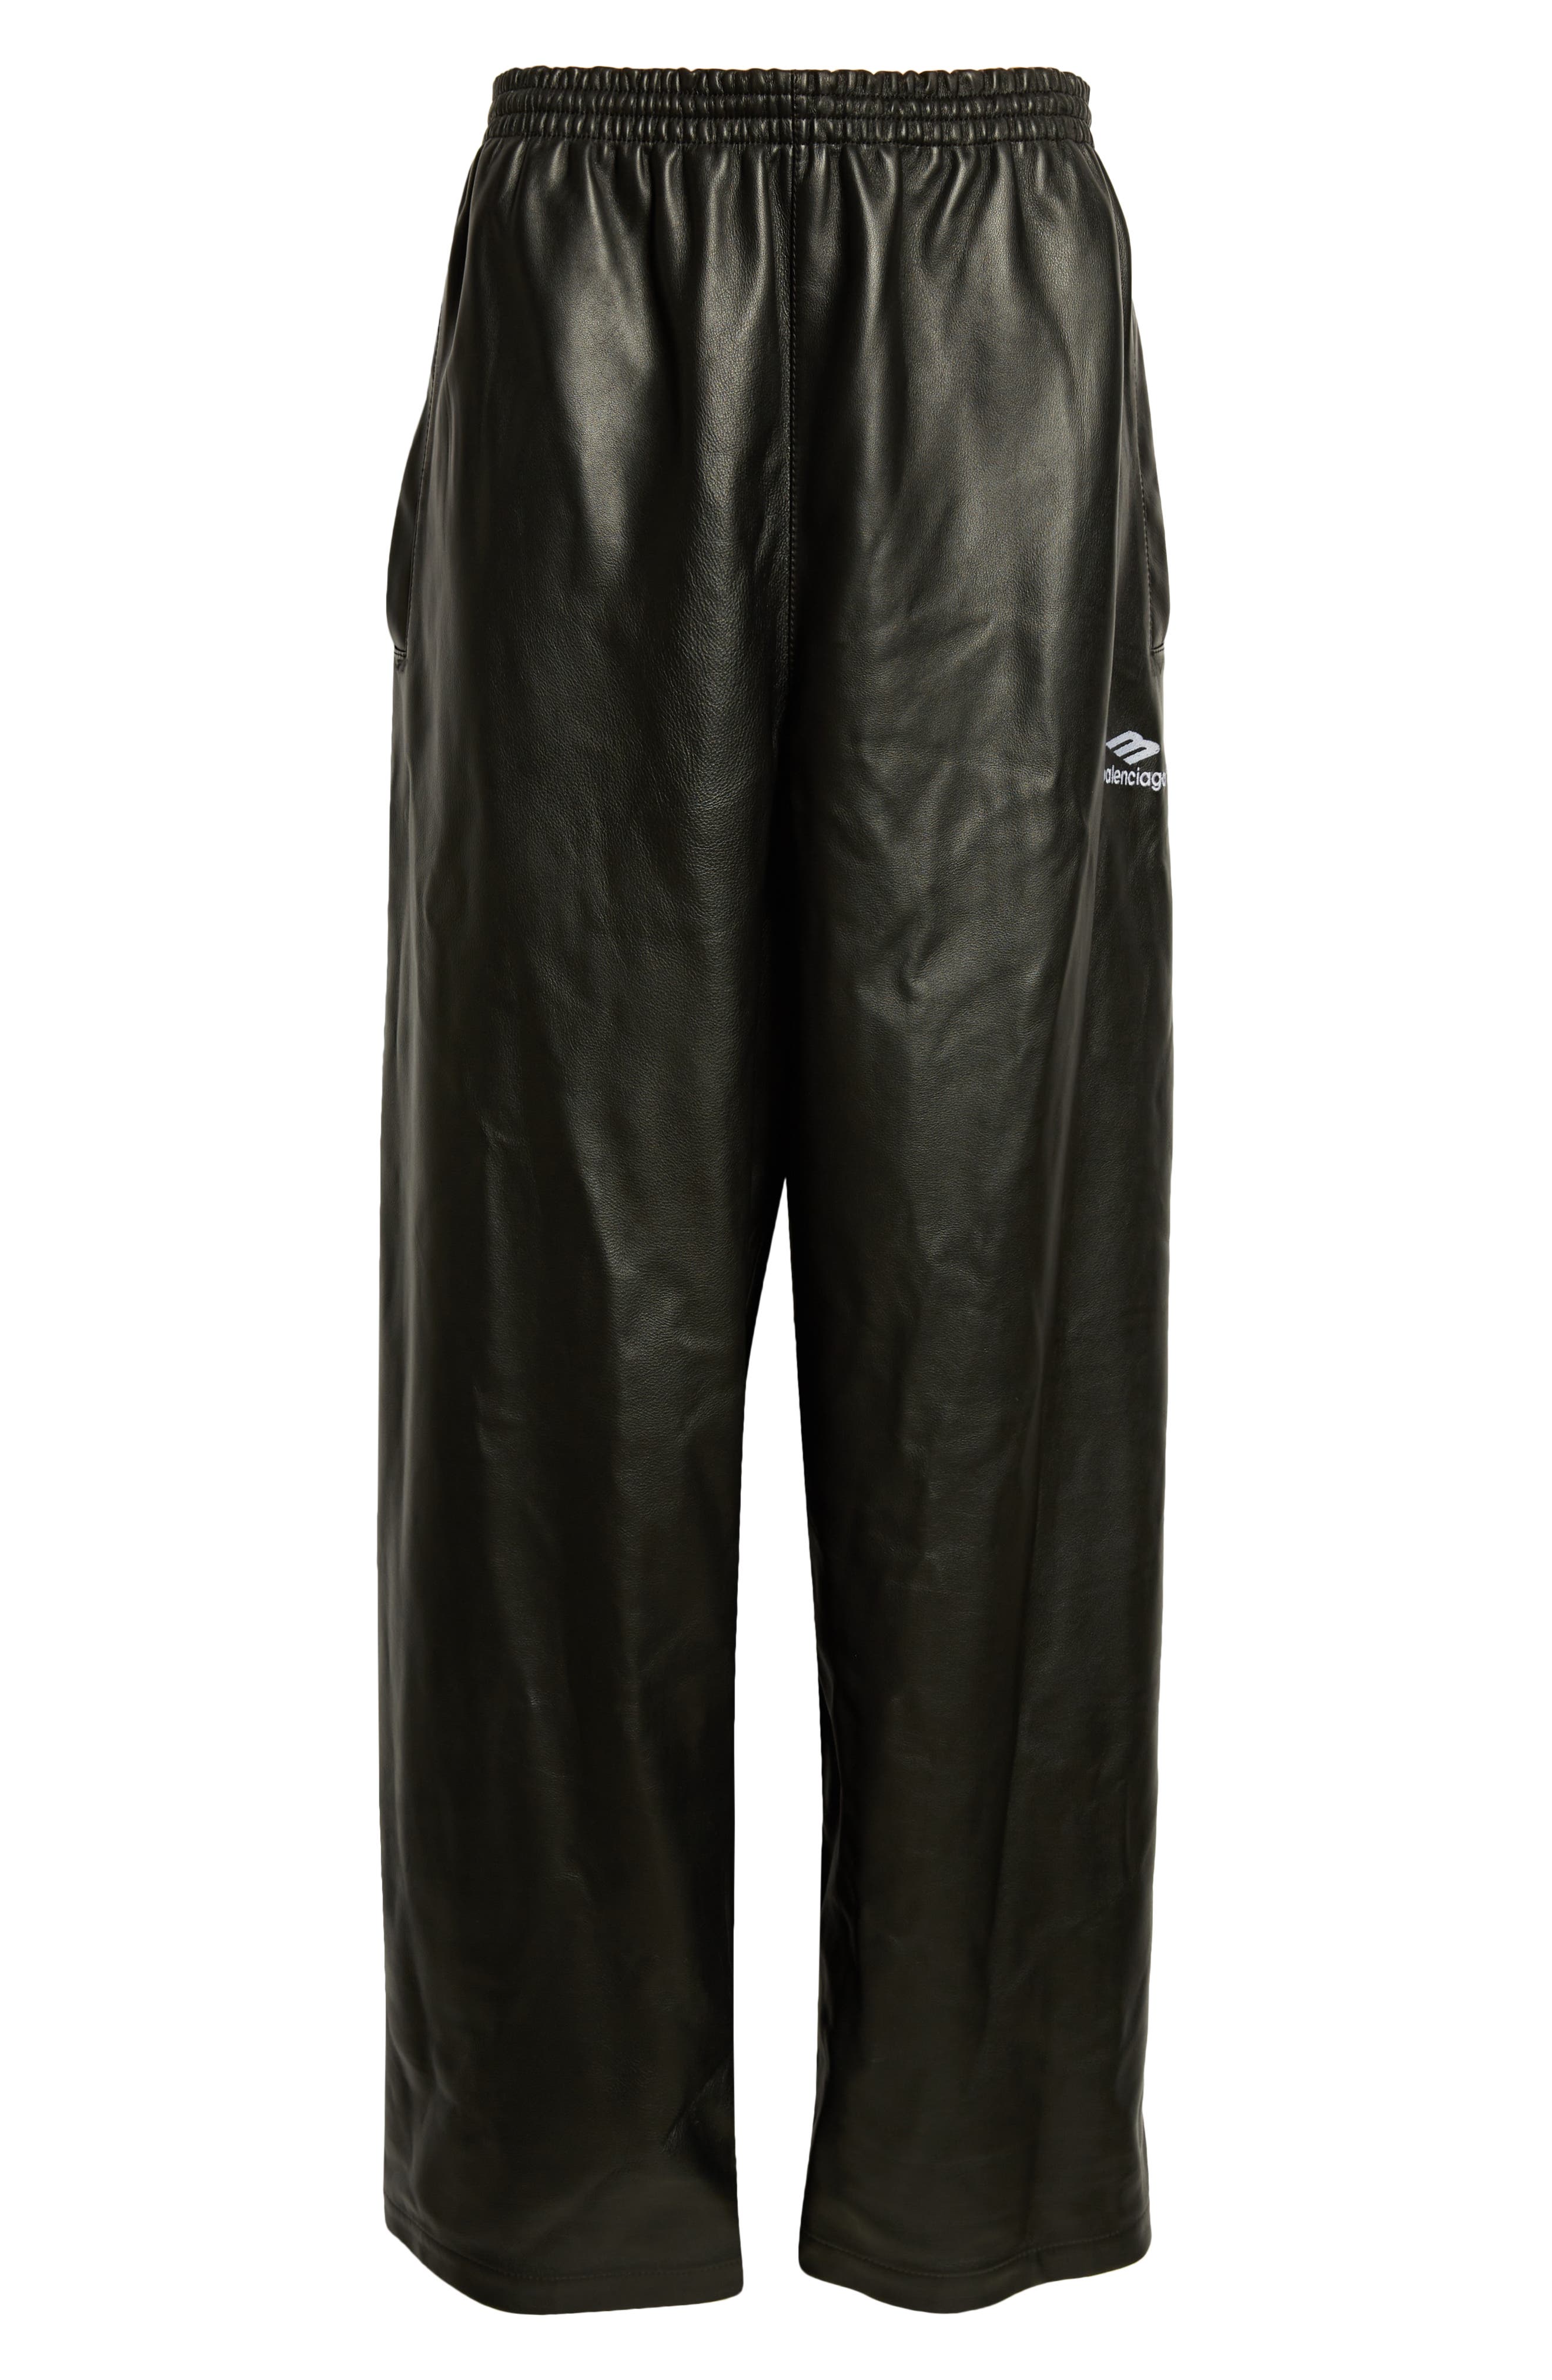 Balenciaga Leather Track Pants   Nordstrom